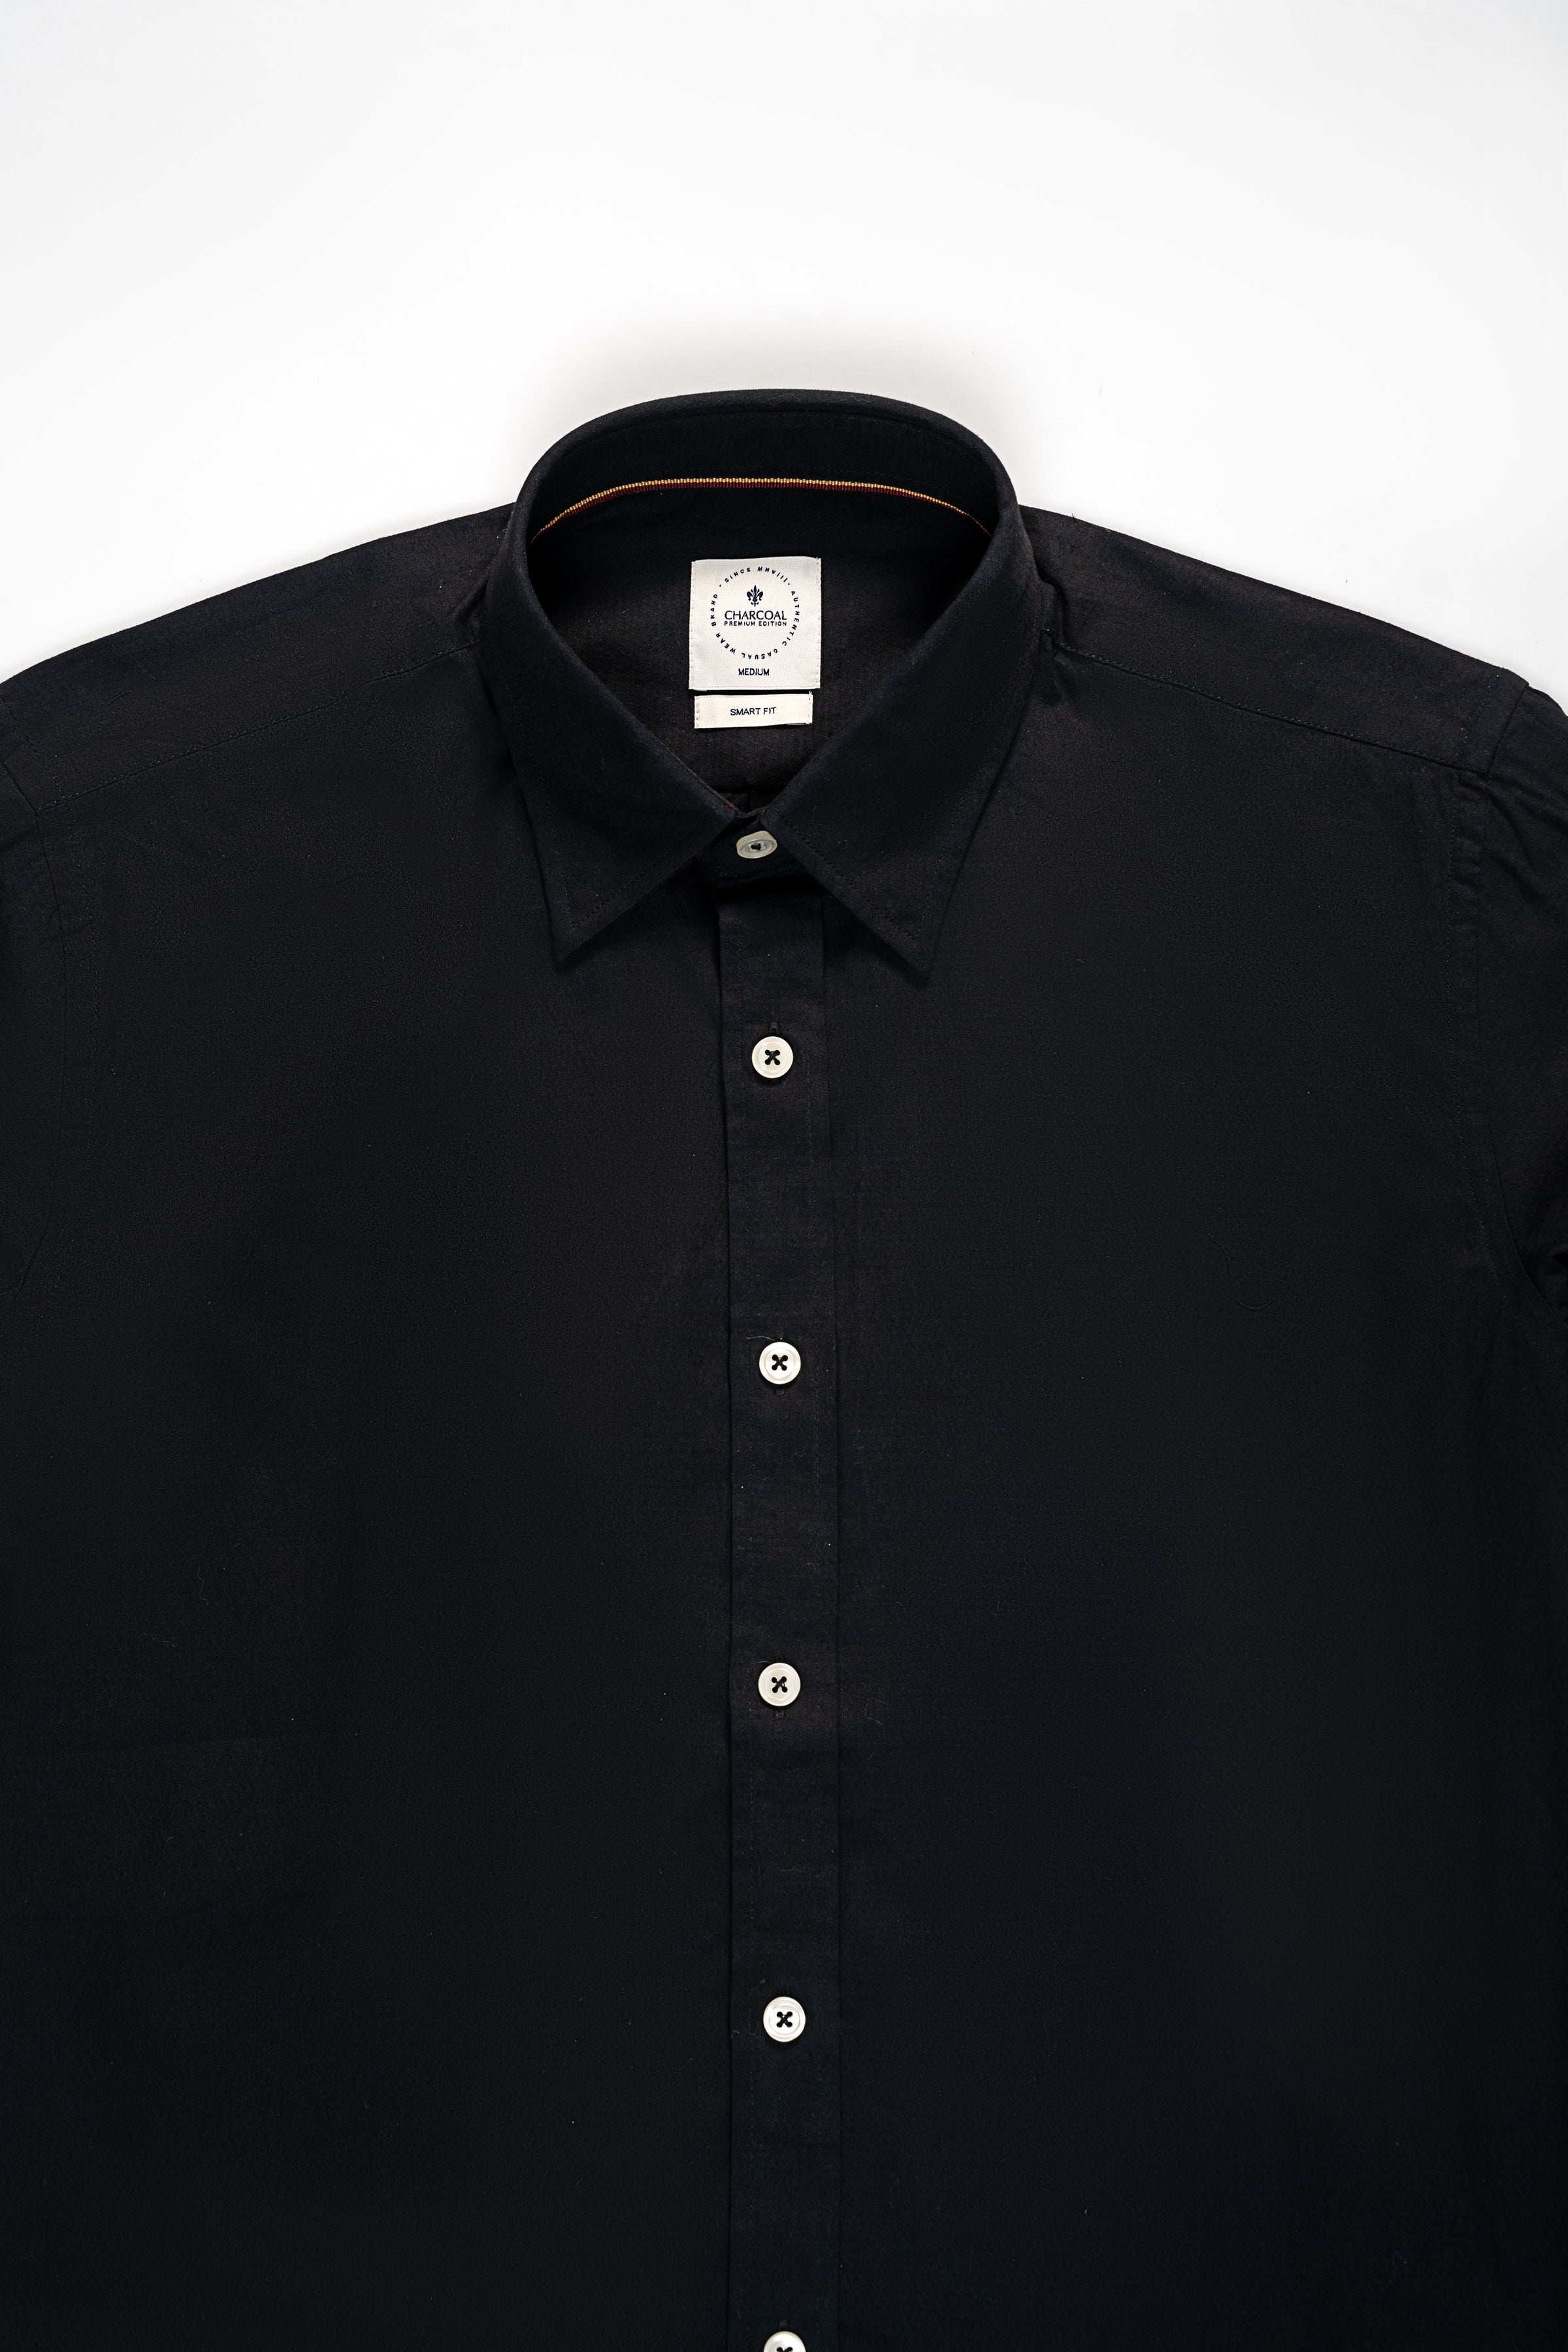 SMART SHIRT BLACK - Charcoal Clothing